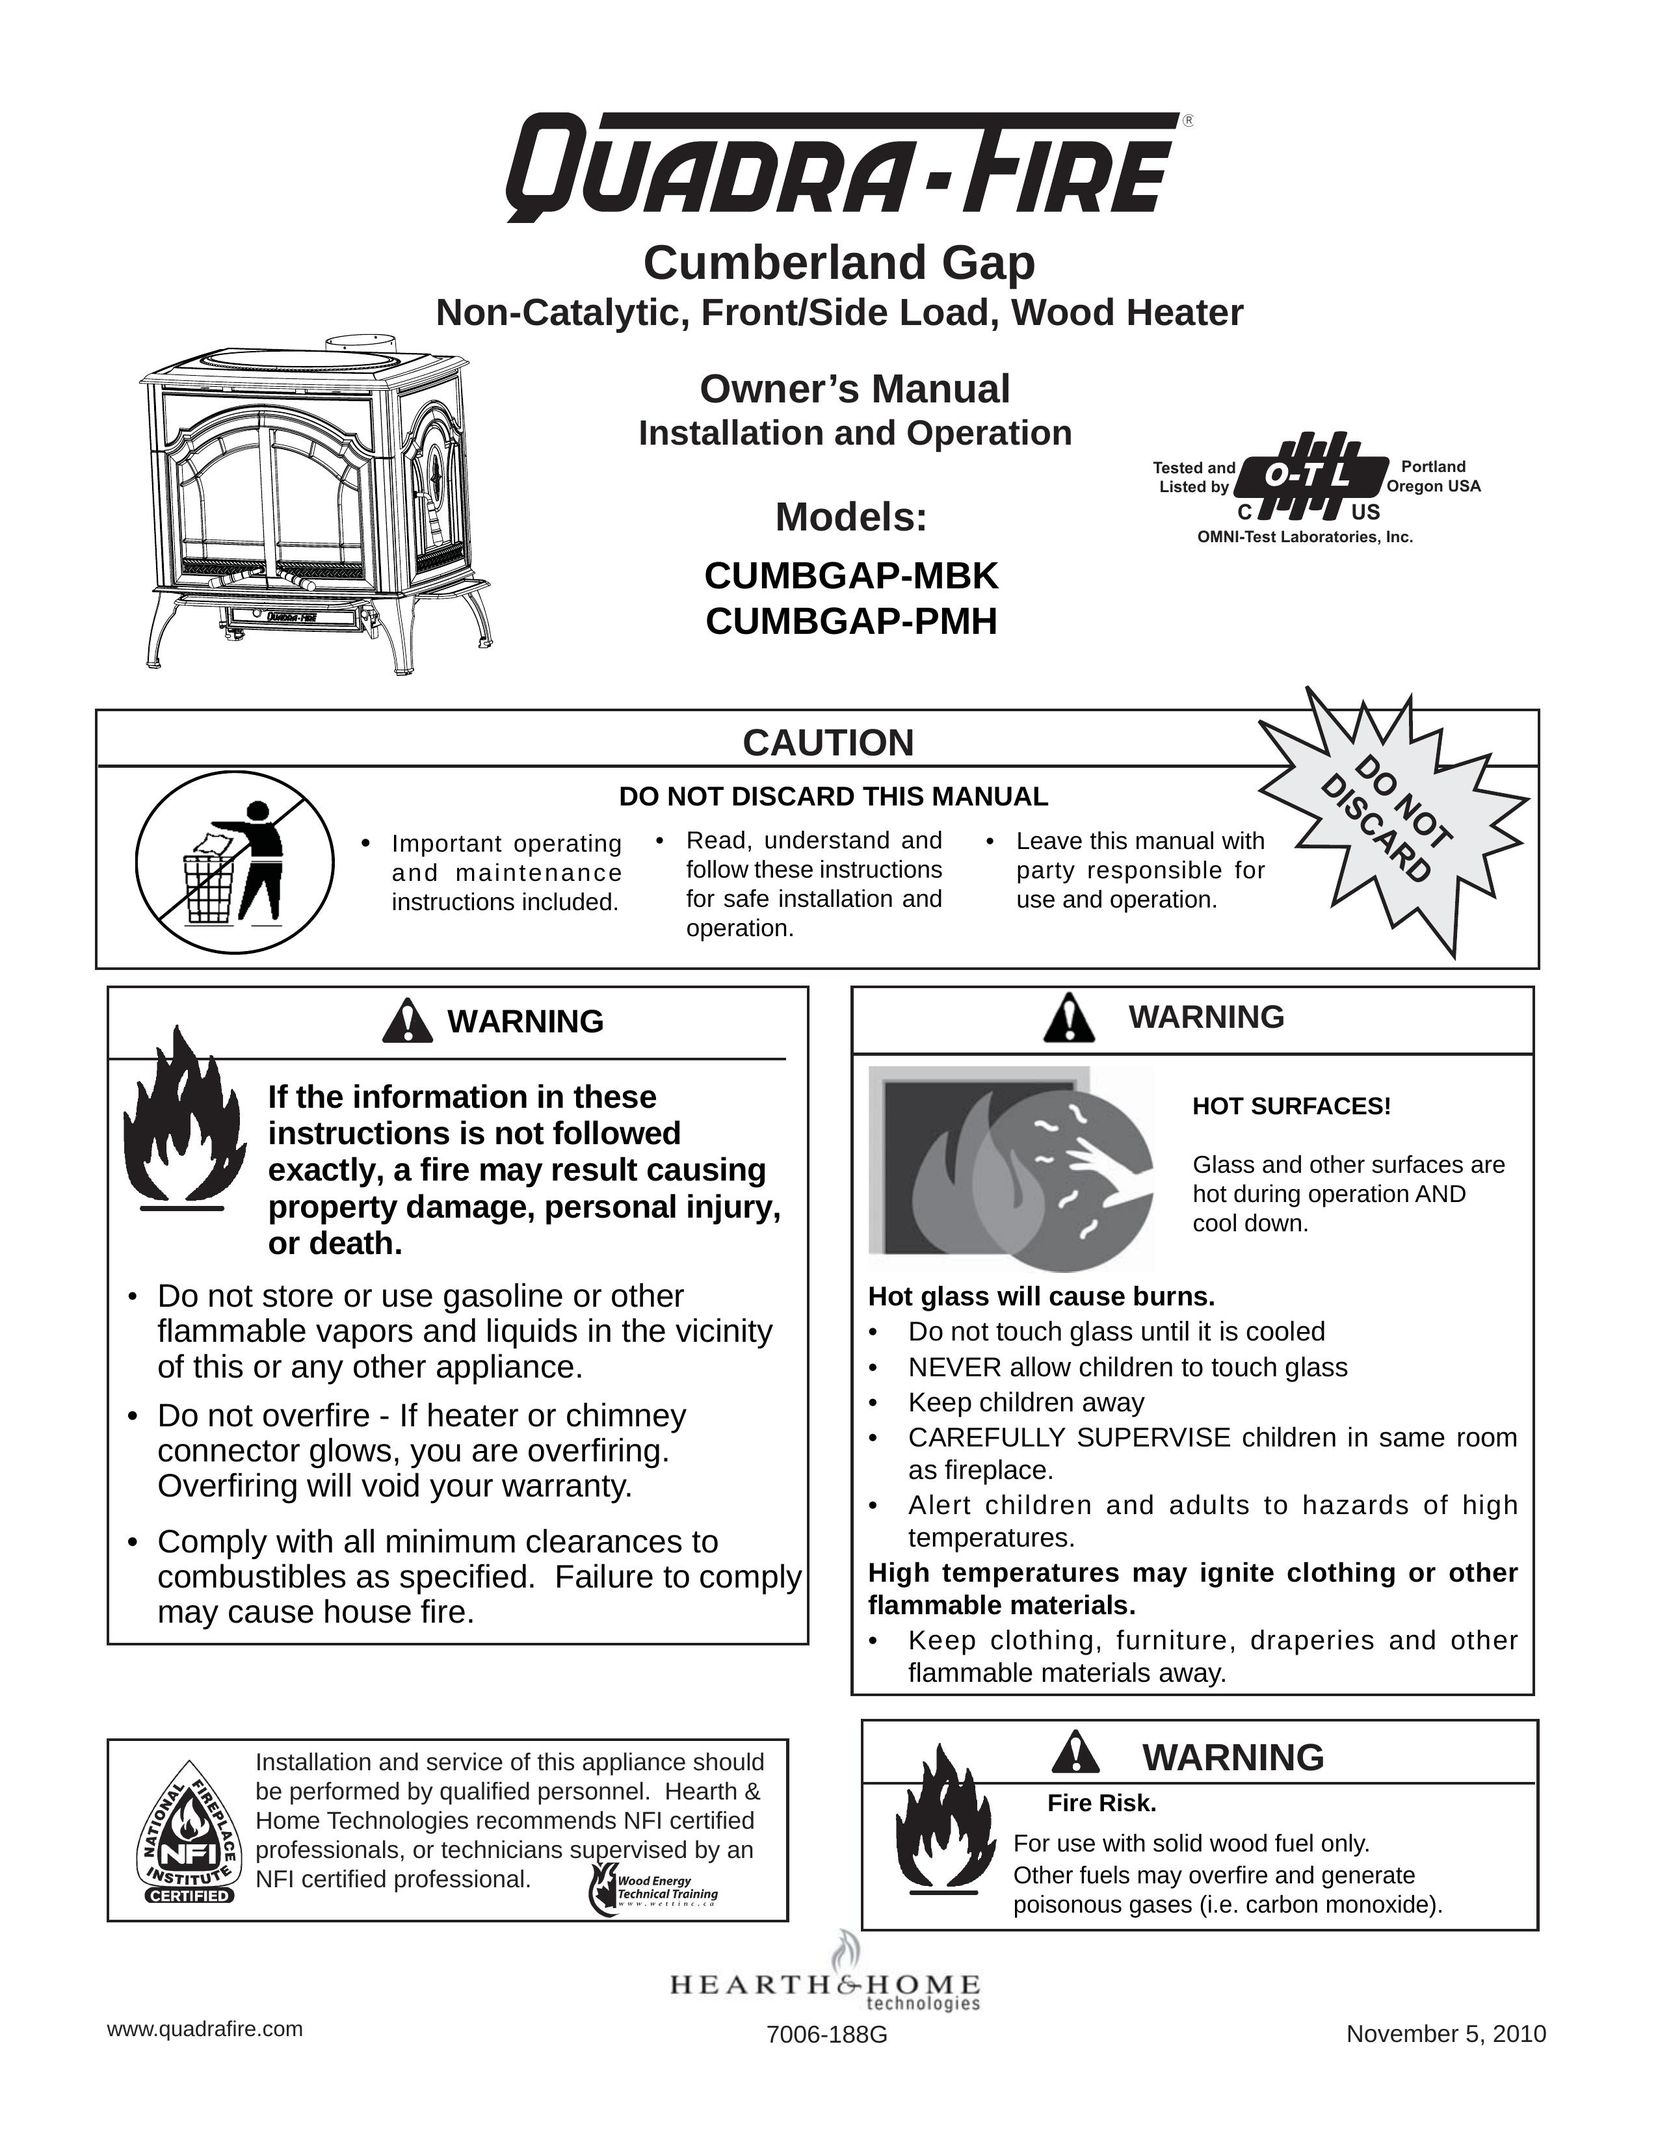 Quadra-Fire CUMBGAP-MBK Indoor Fireplace User Manual